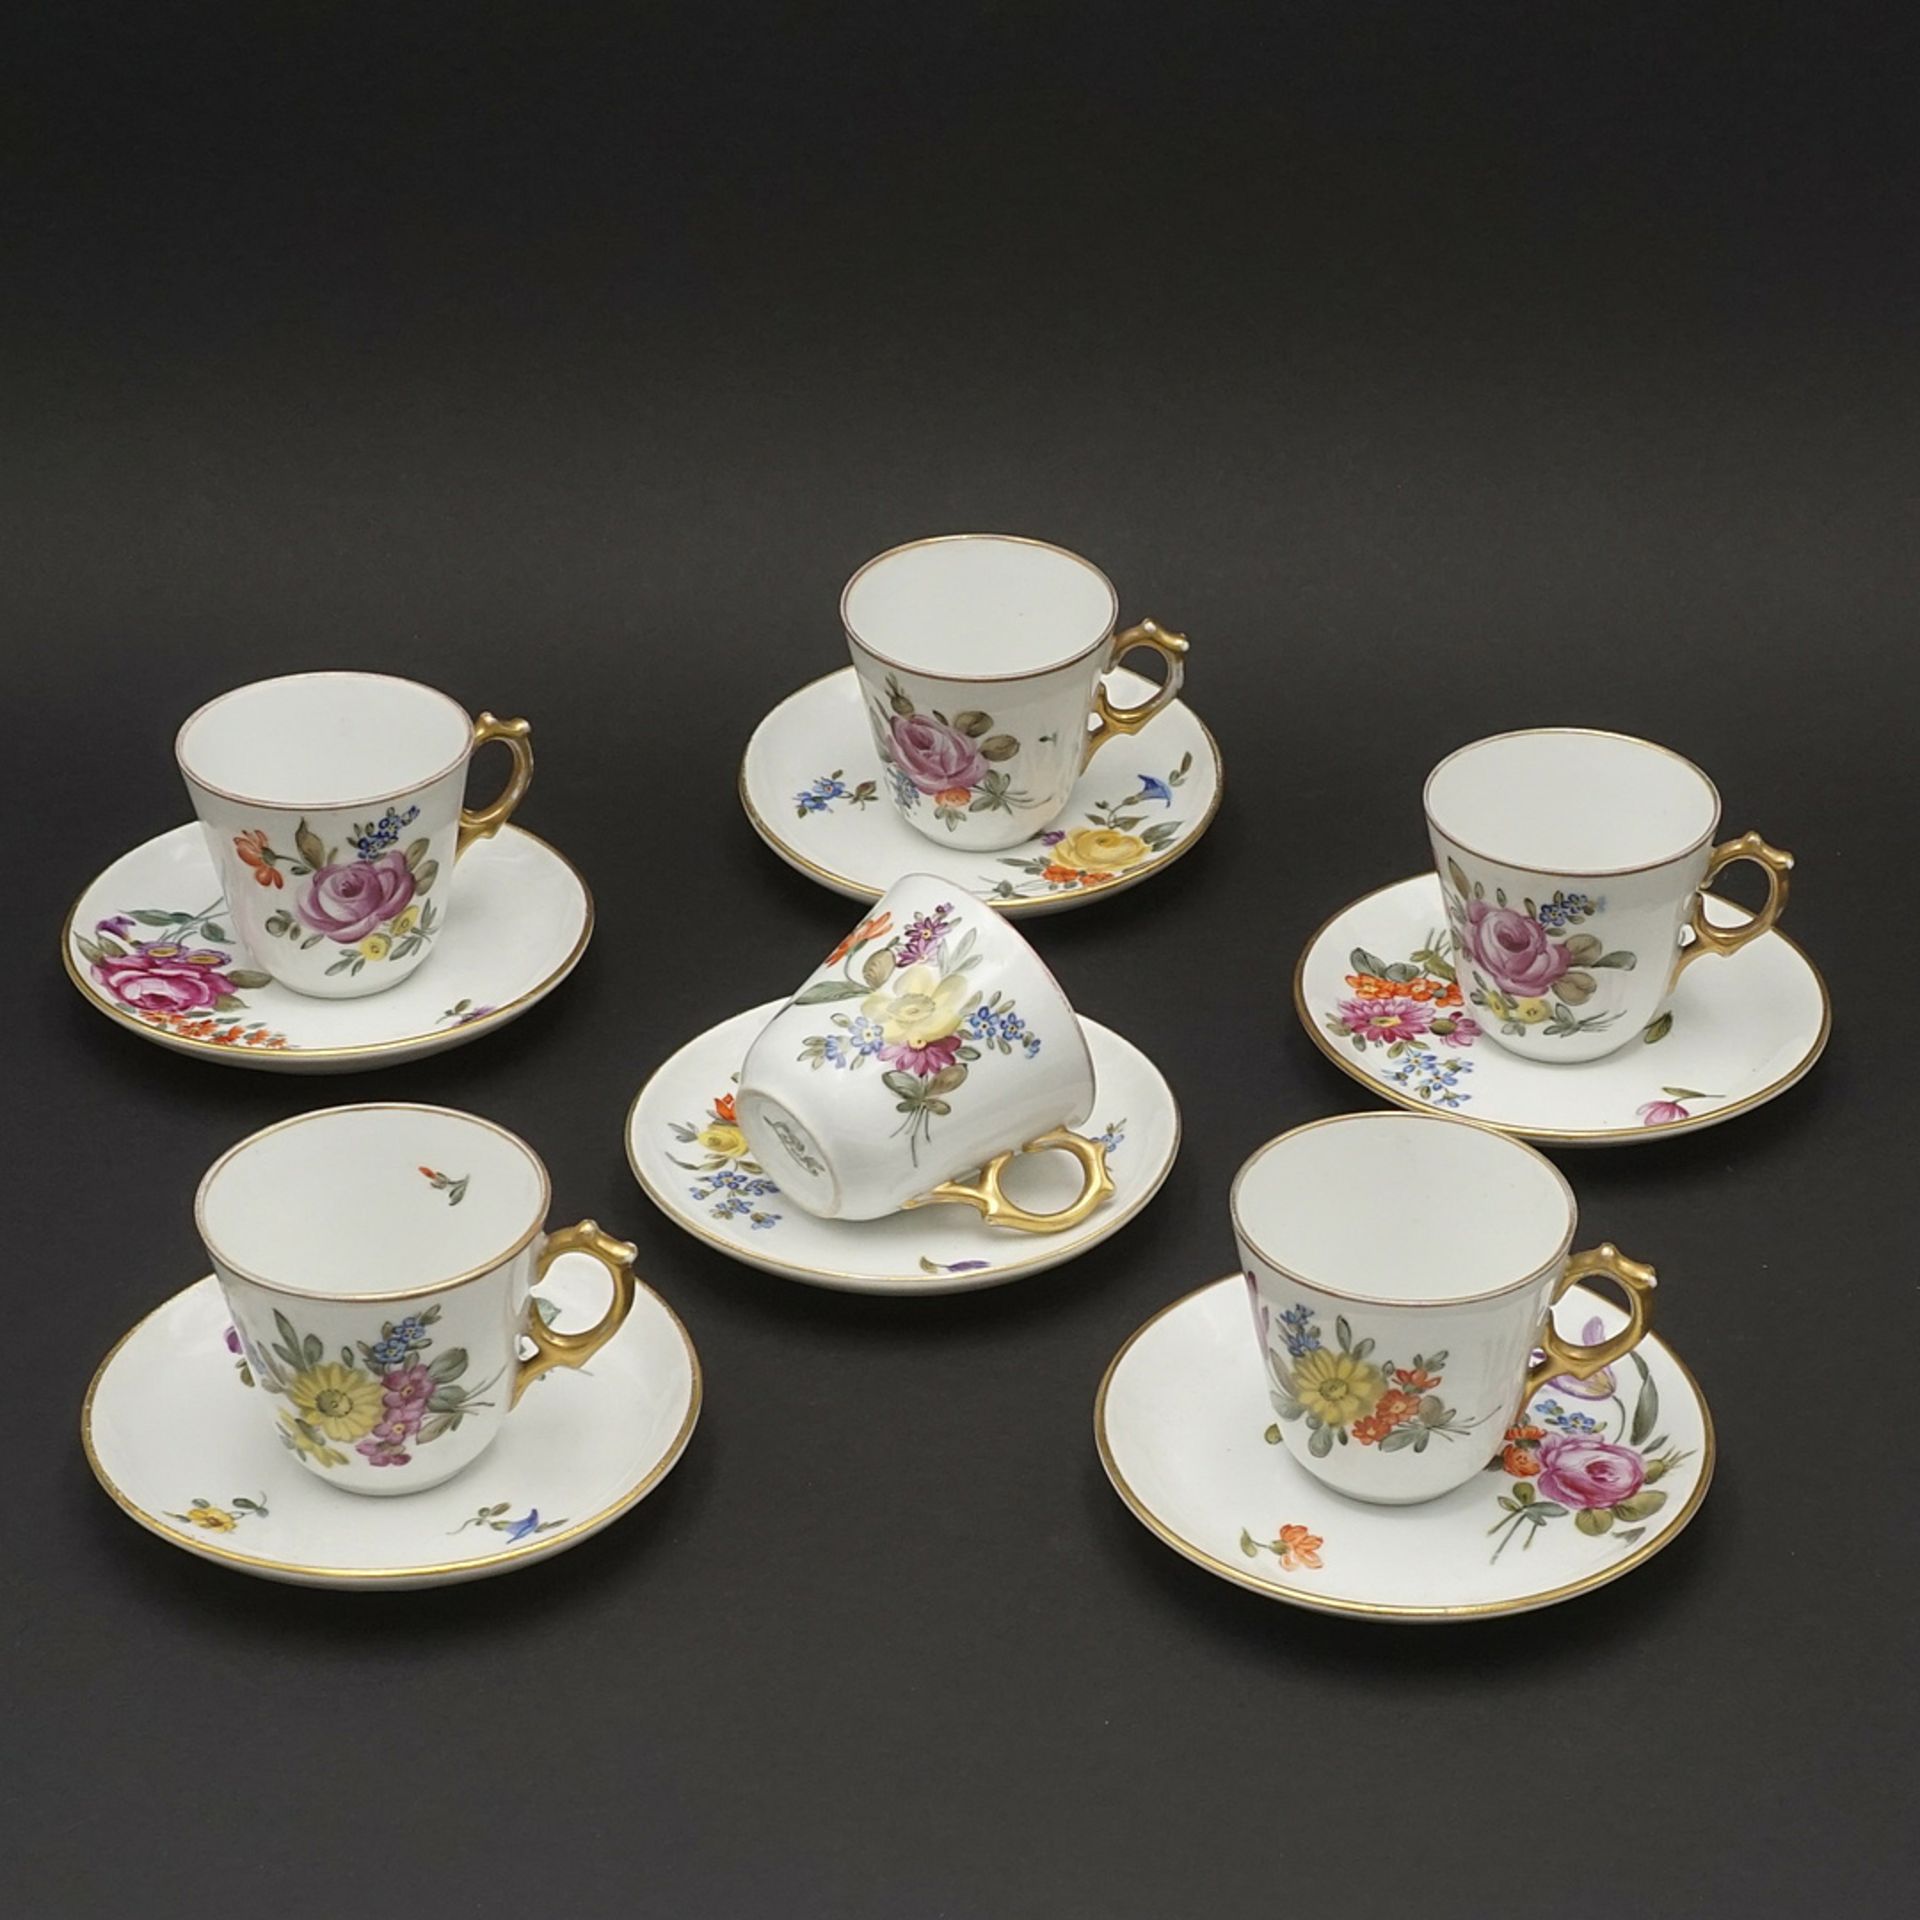 Six Ludwigsburg porcelain mocha cups and saucers